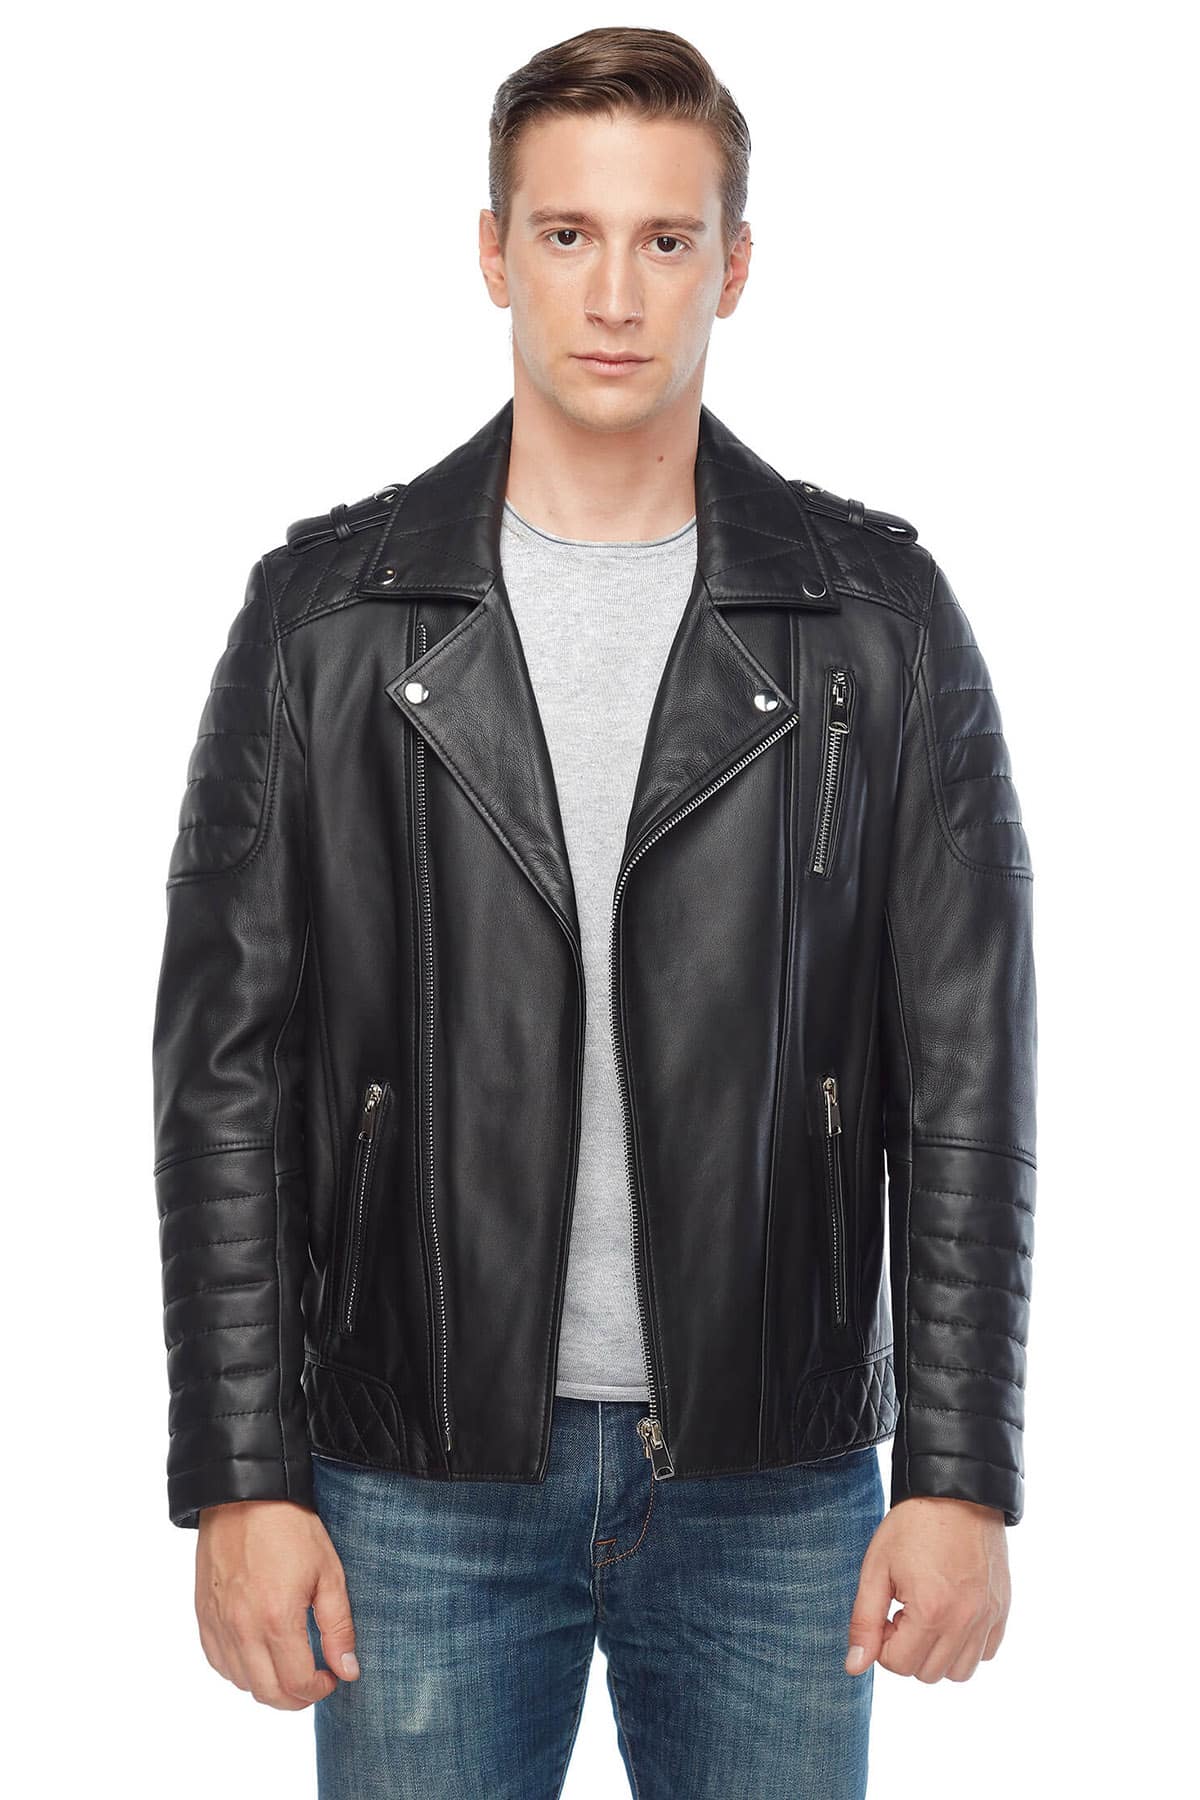 George Barnett Men's 100 % Real Black Leather Biker Jacket